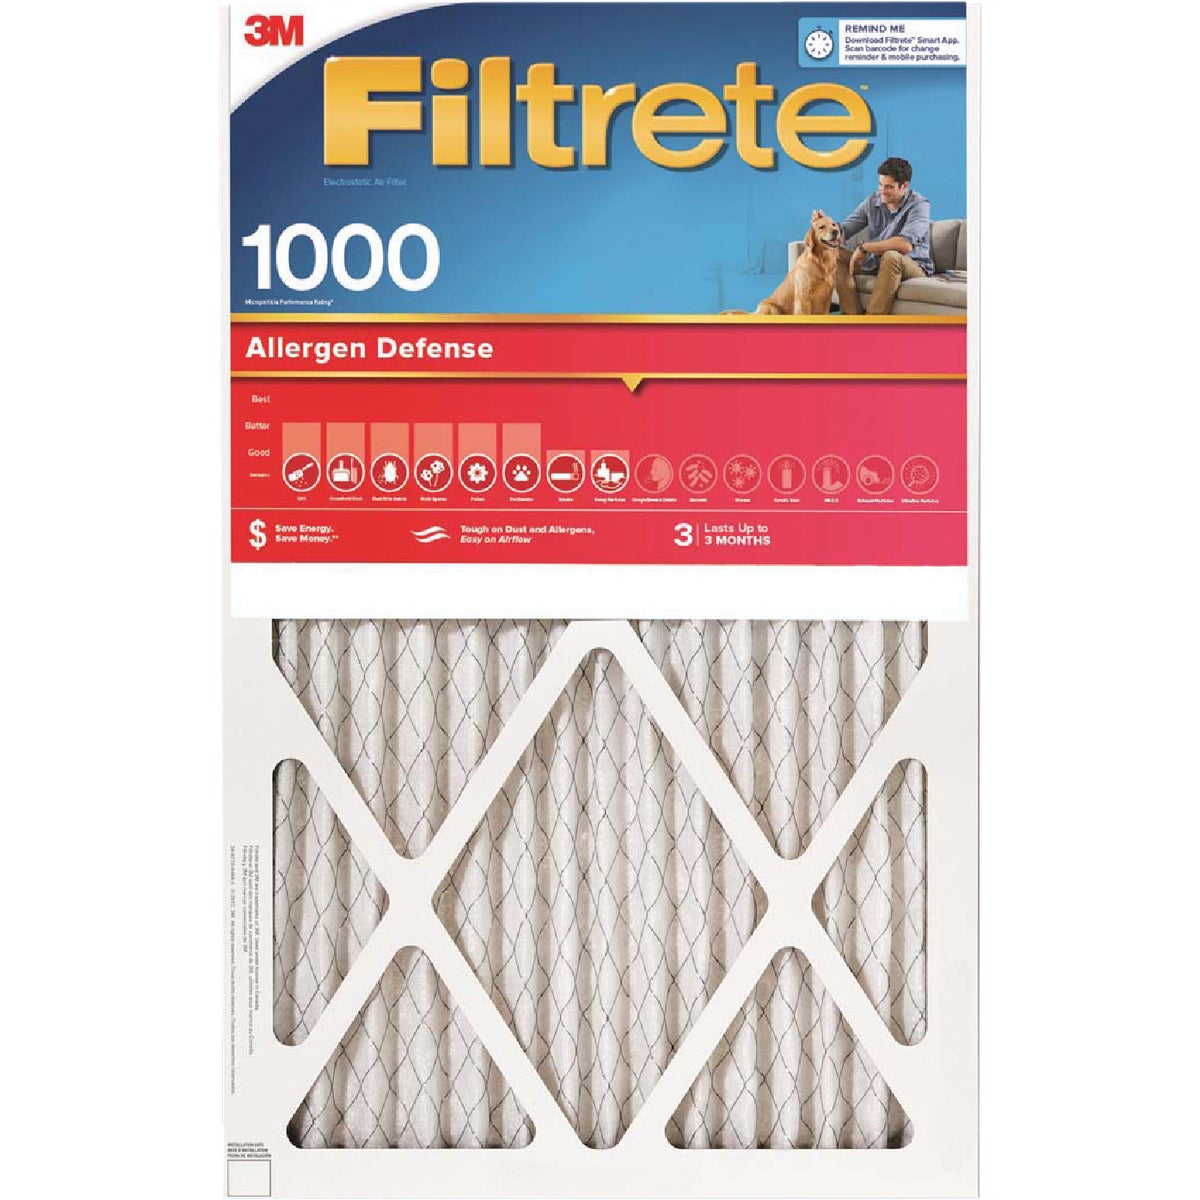 Filtrete 20 In. x 20 In. x 1 In. Allergen Defense 1000/1085 MPR Furnace Filter